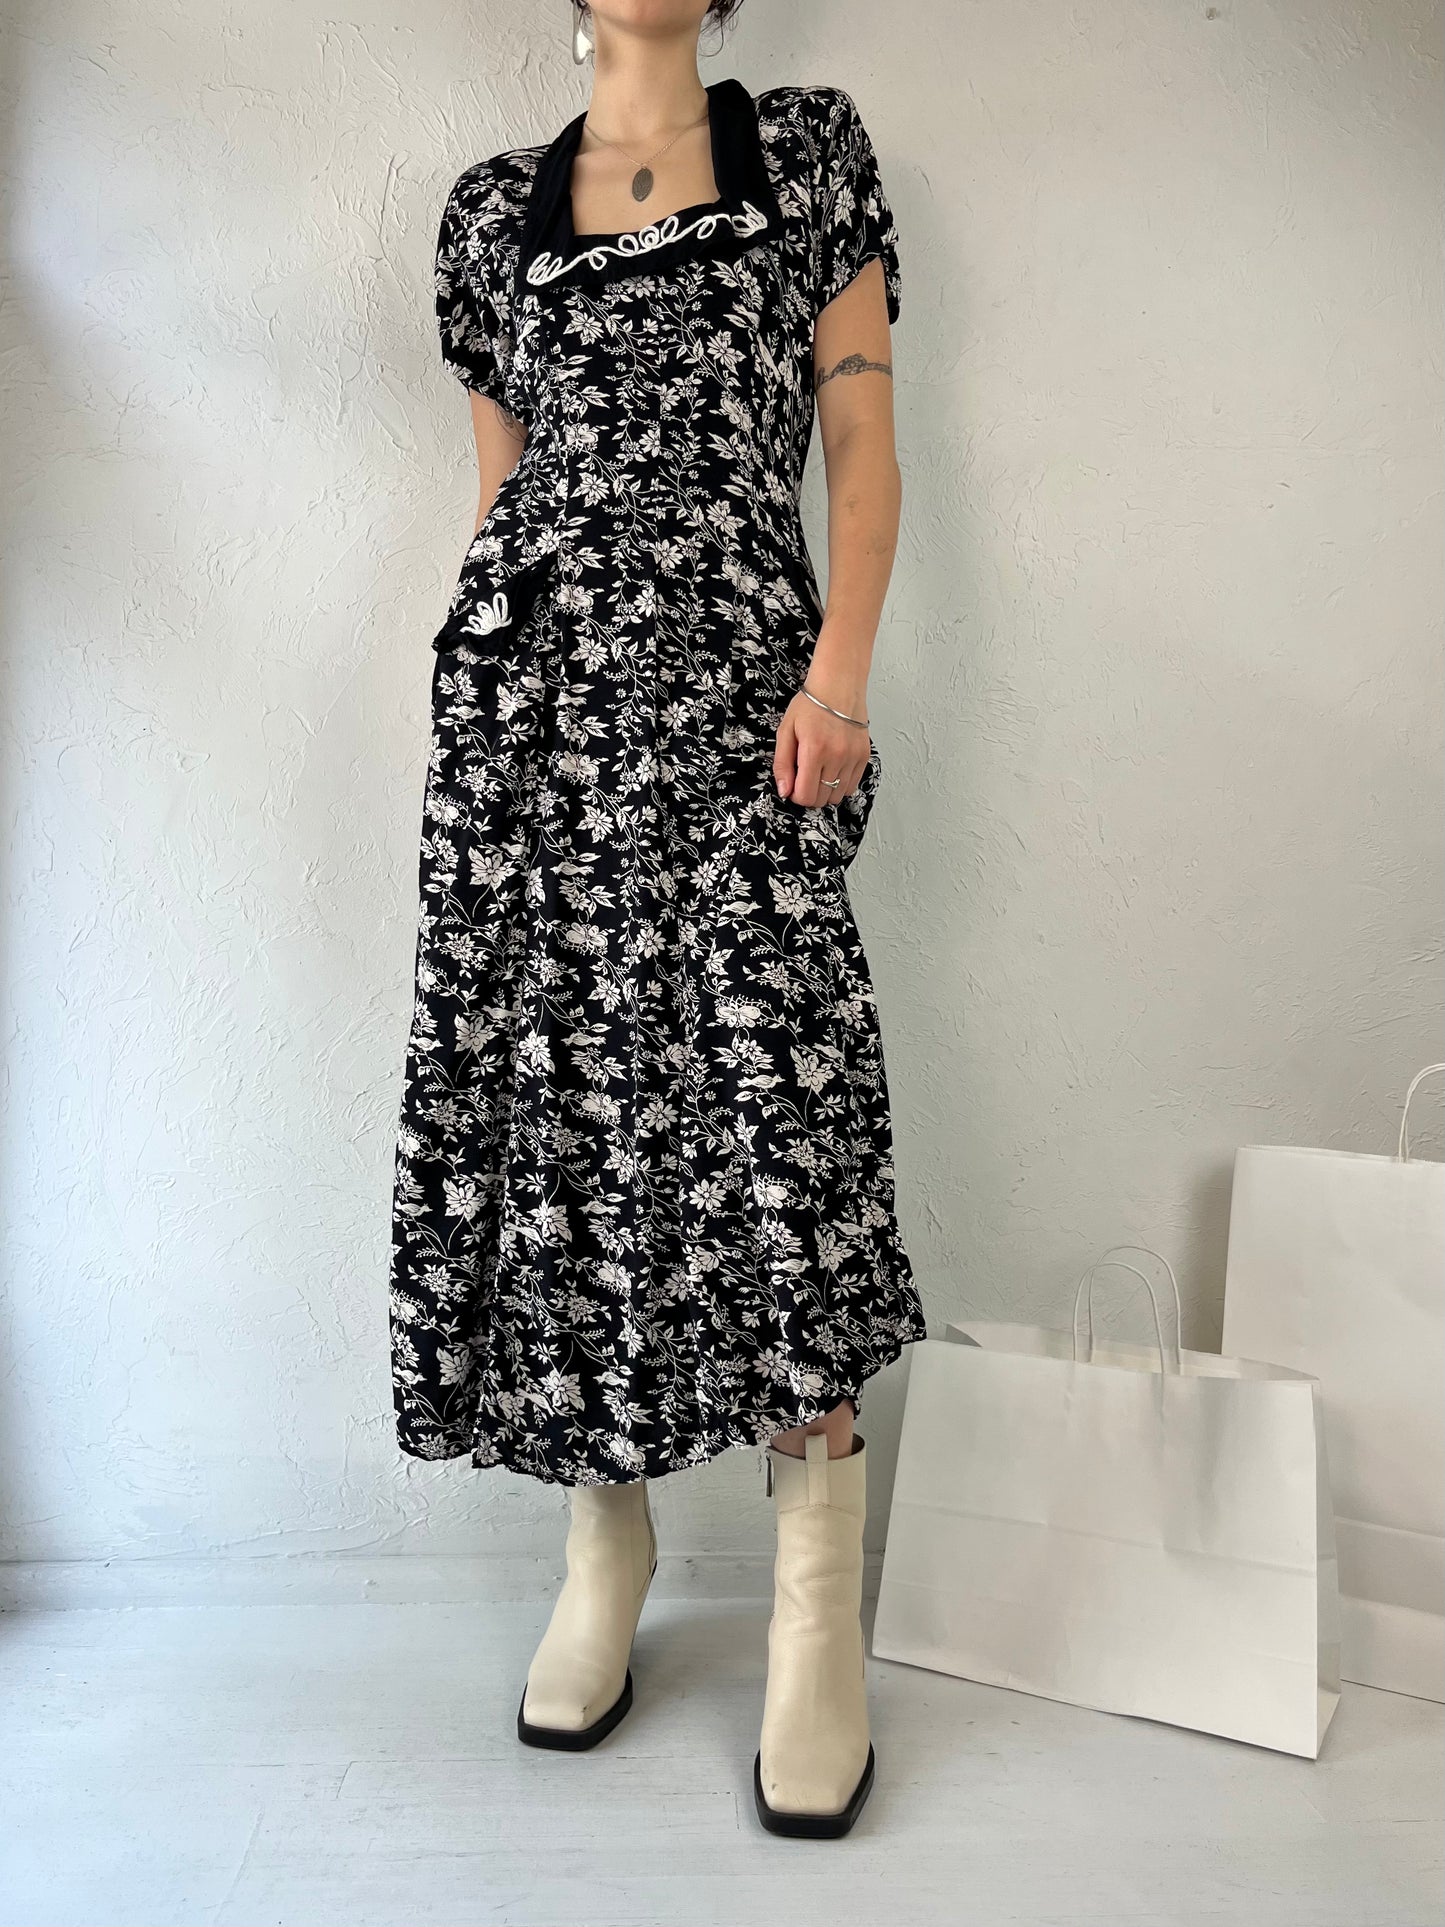 90s 'Style Works' Black Floral Print Rayon Dress / Medium